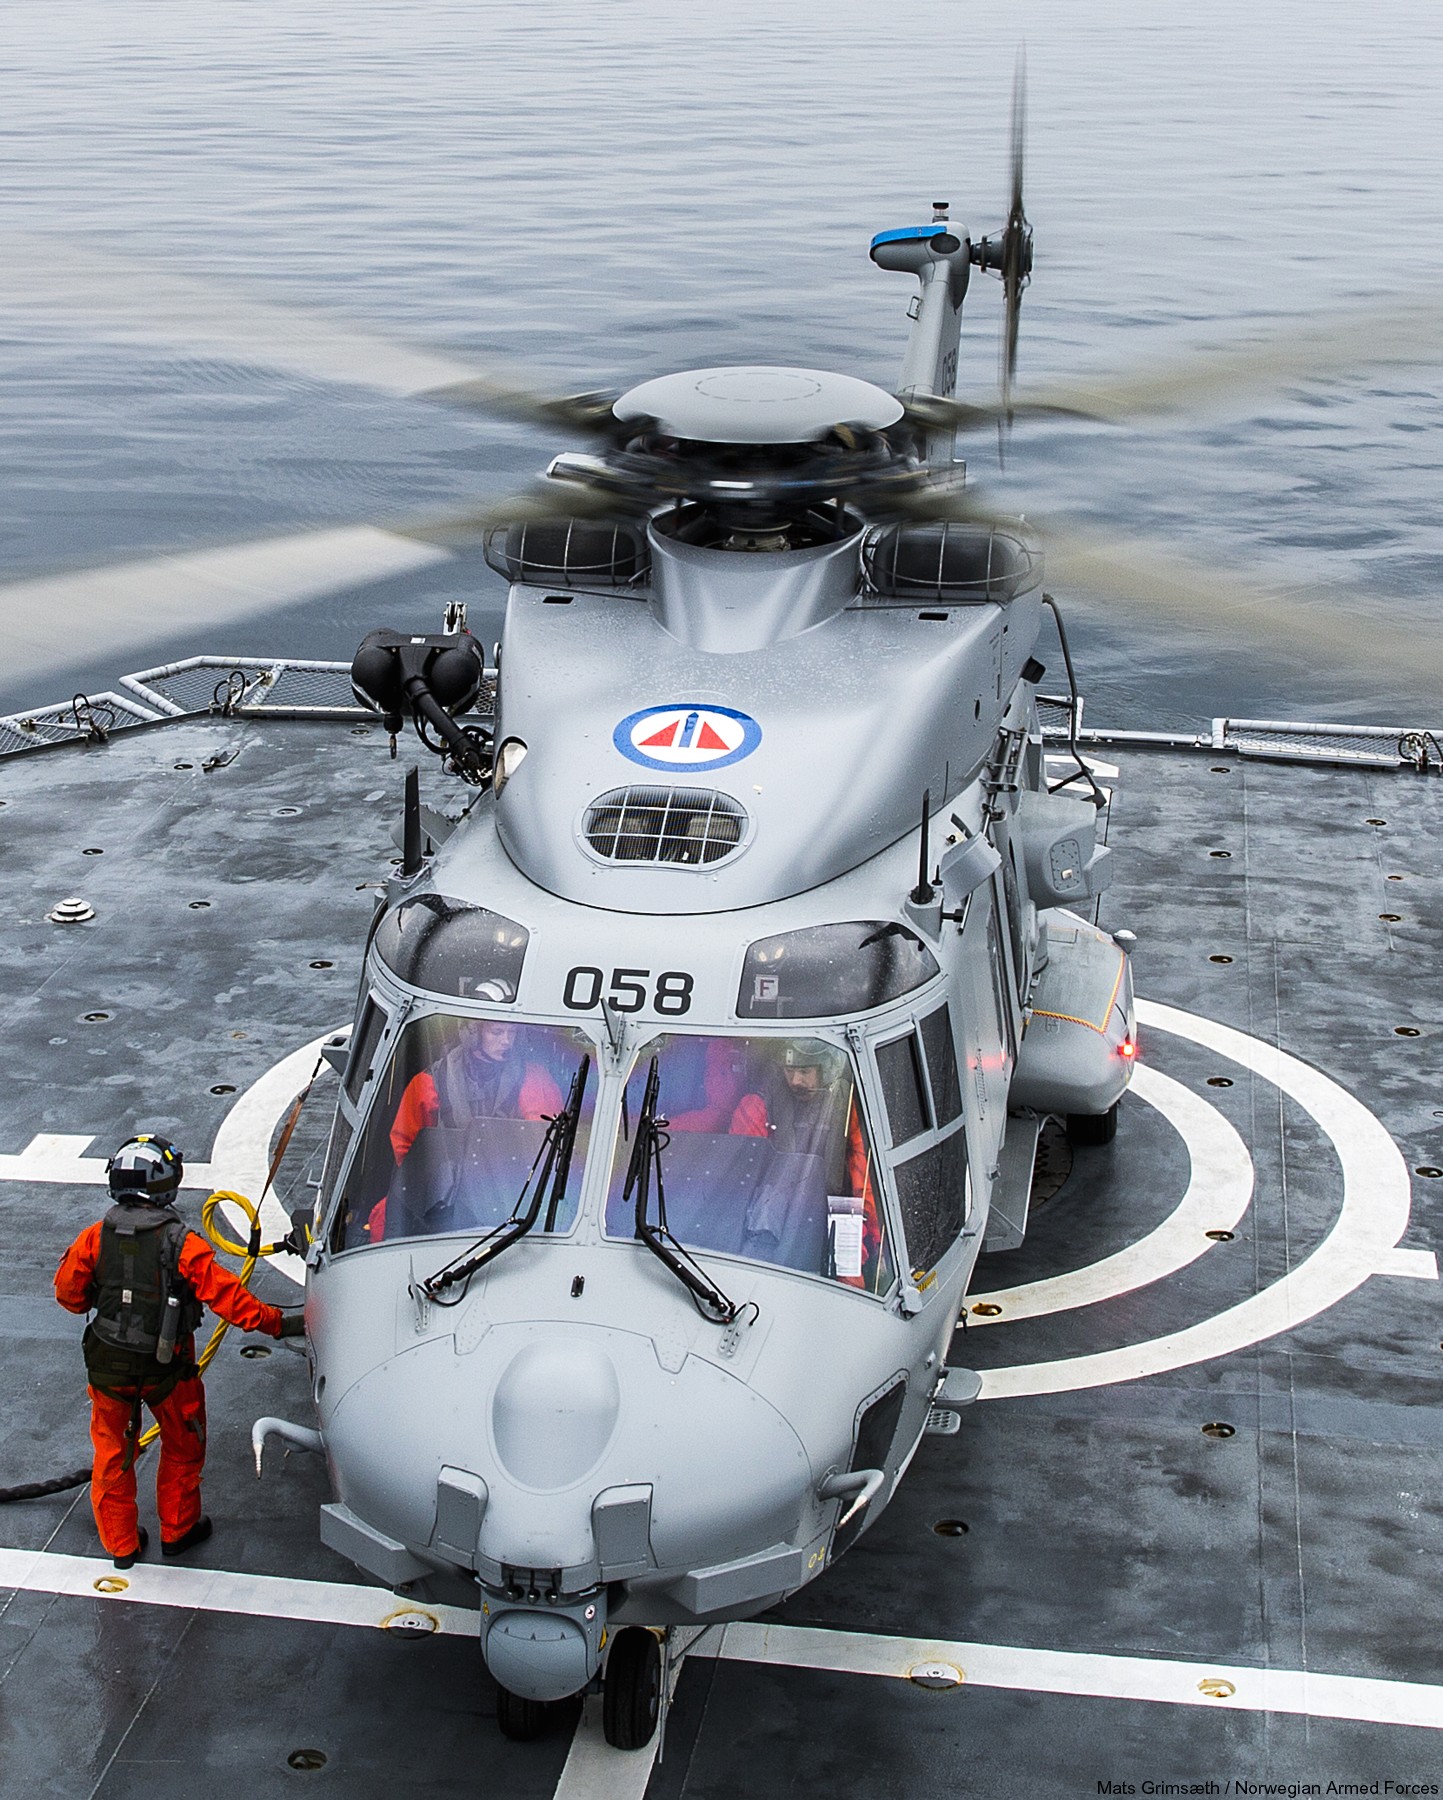 nh90 nfh asw helicopter royal norwegian coast guard navy air force kystvakt sjoforsvaret 058 08